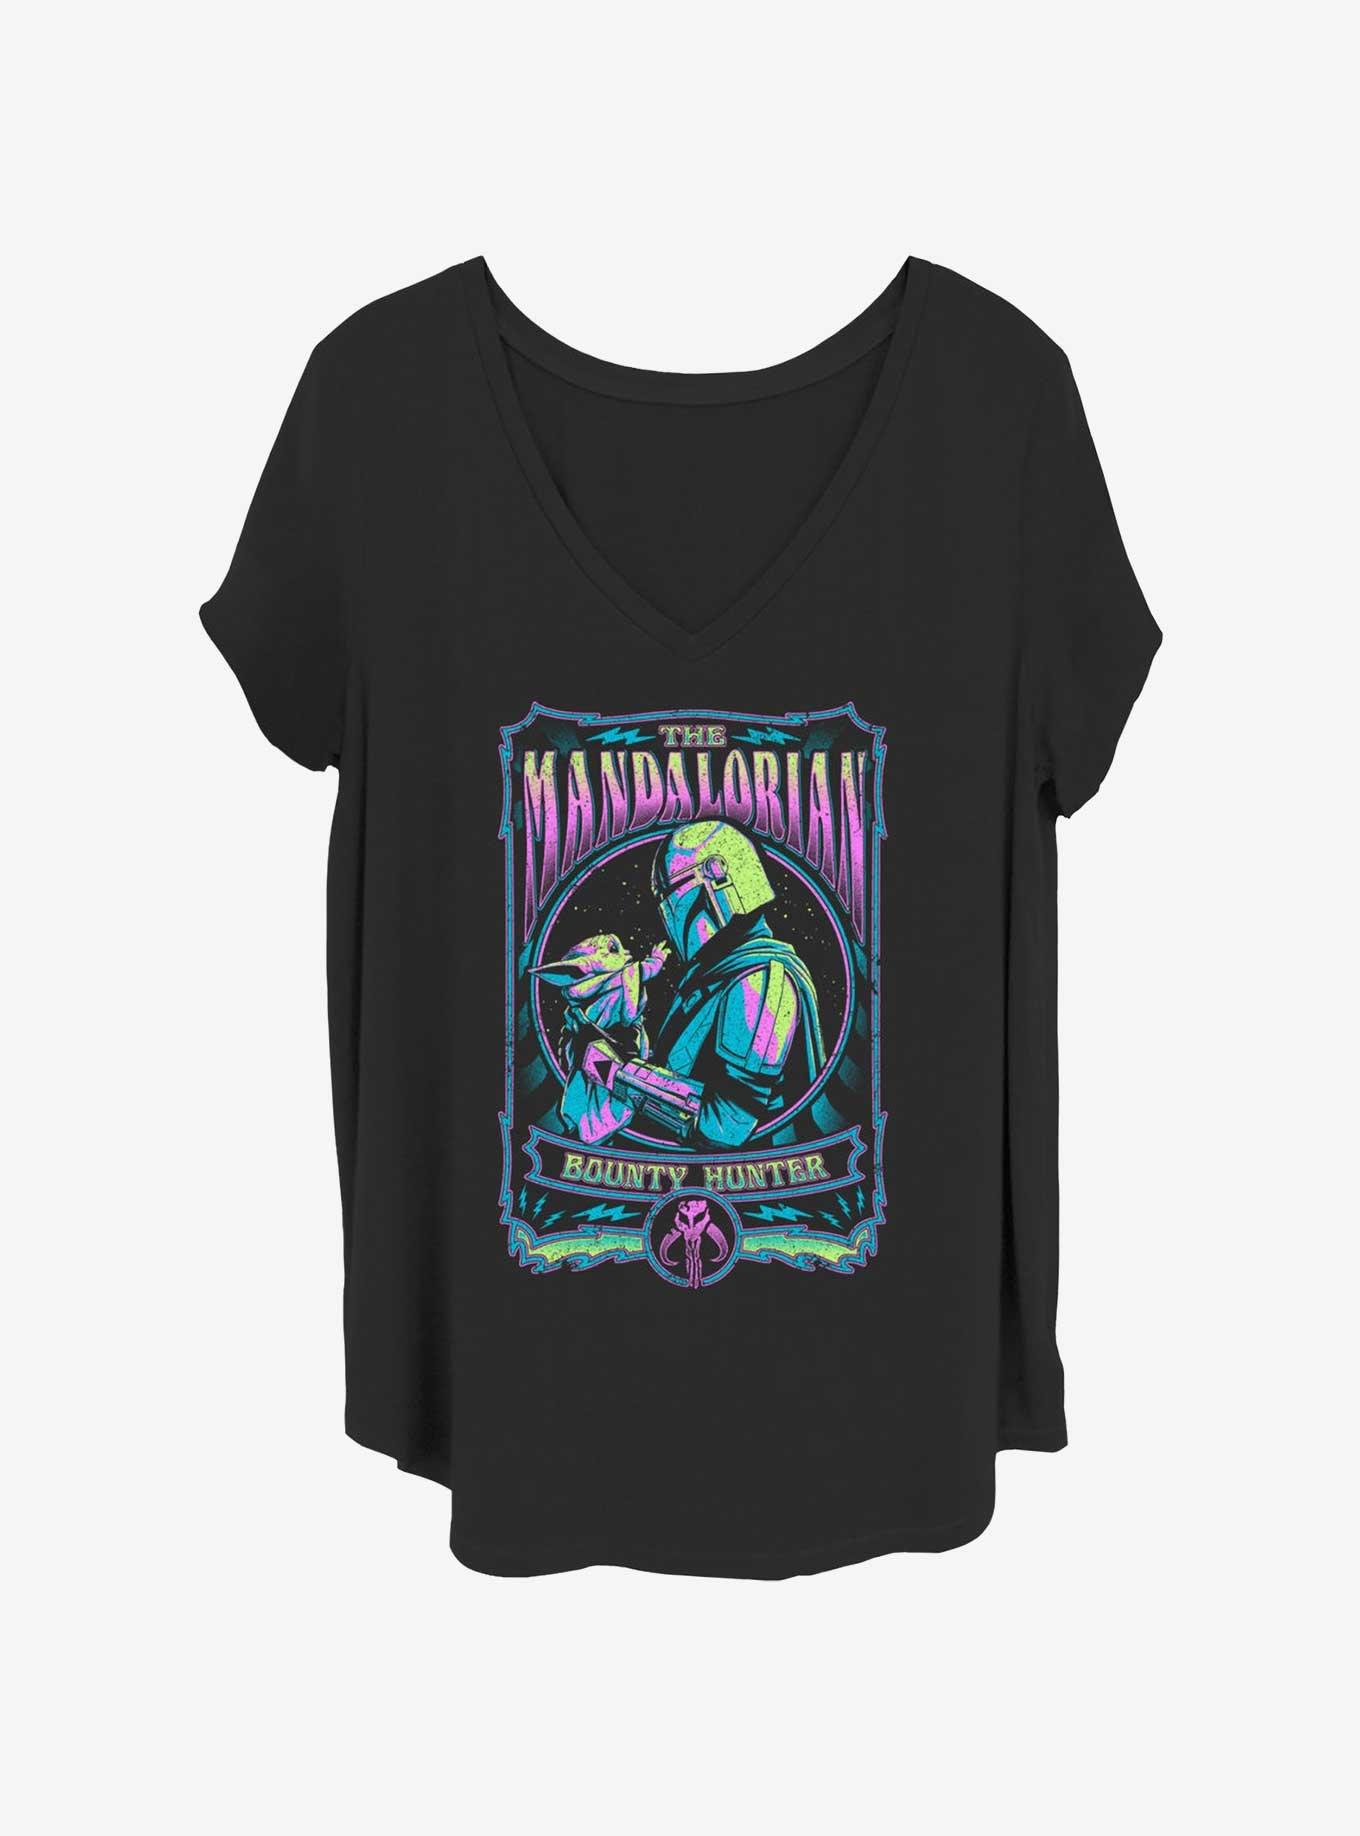 Star Wars The Mandalorian Trippy Bounty Hunter Poster Girls T-Shirt Plus